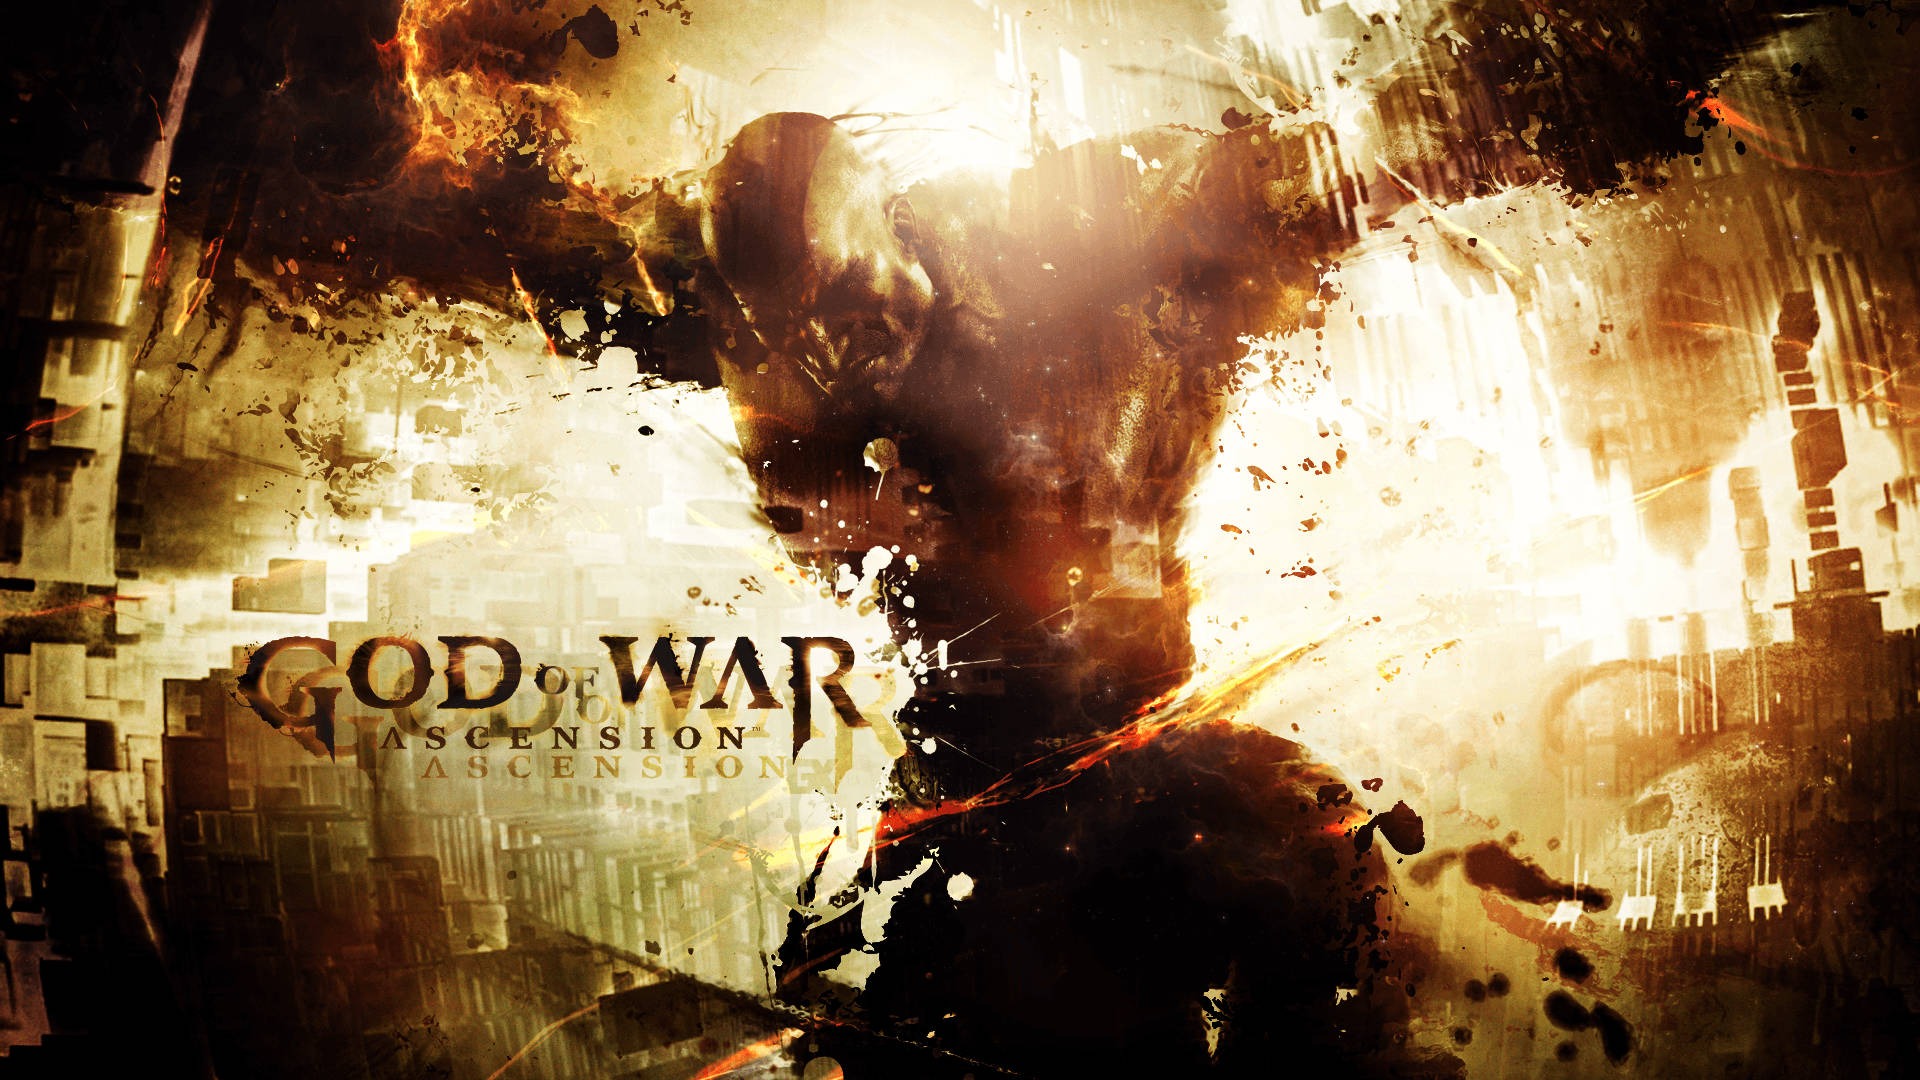 Free God Of War Wallpaper Downloads, [100+] God Of War Wallpapers for FREE  